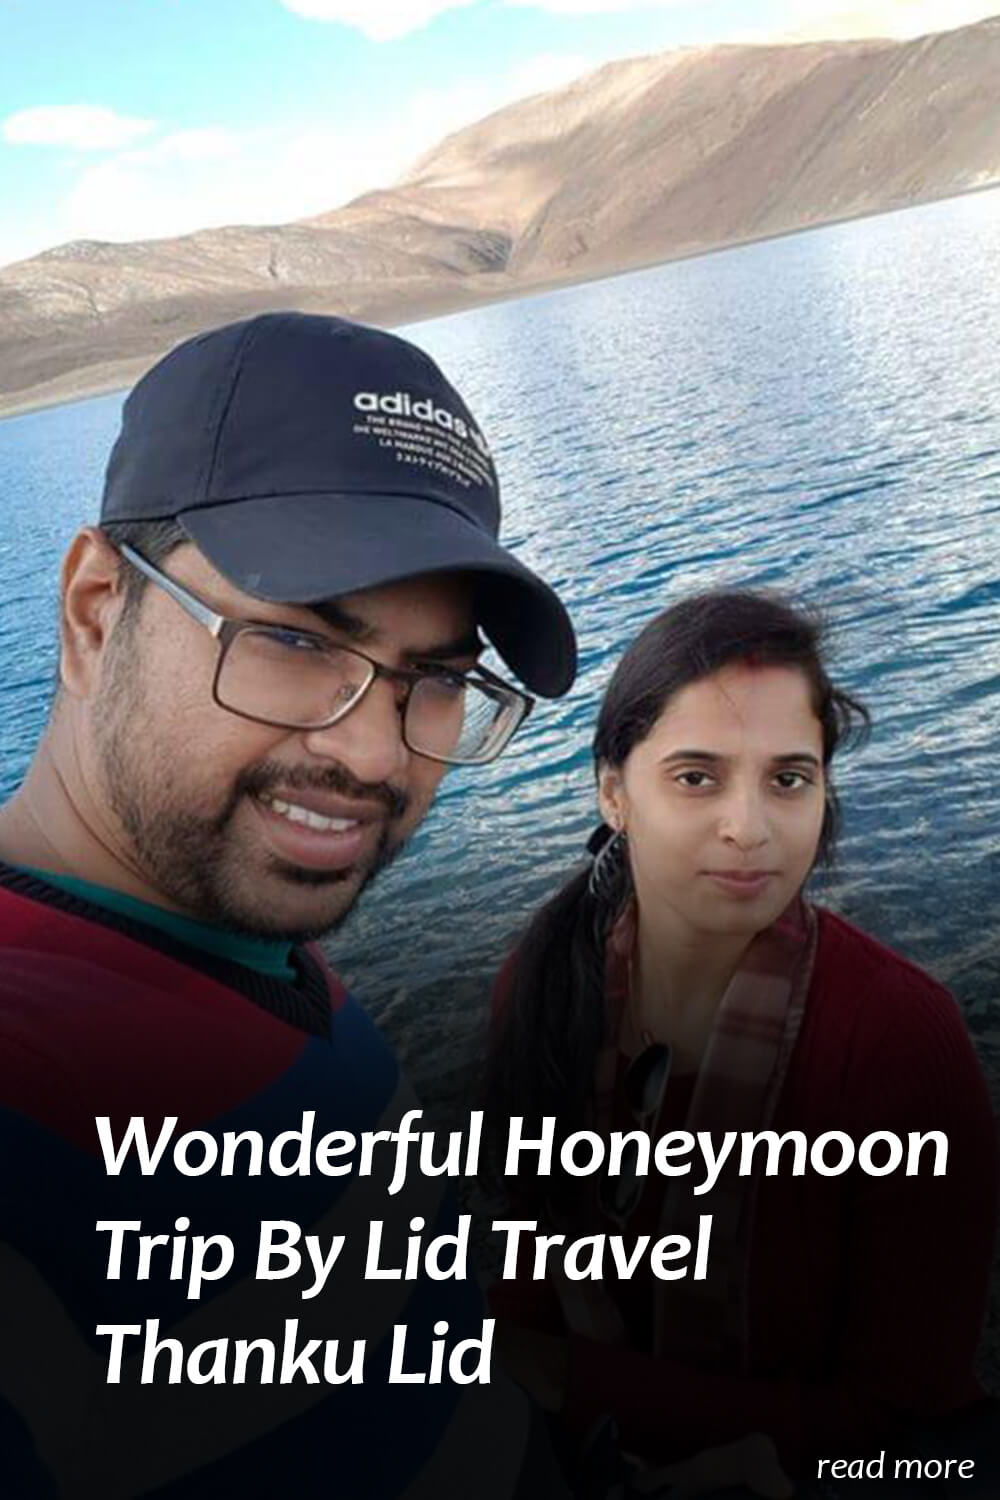 leh ladakh honeymoon tour packages by LiD Travel